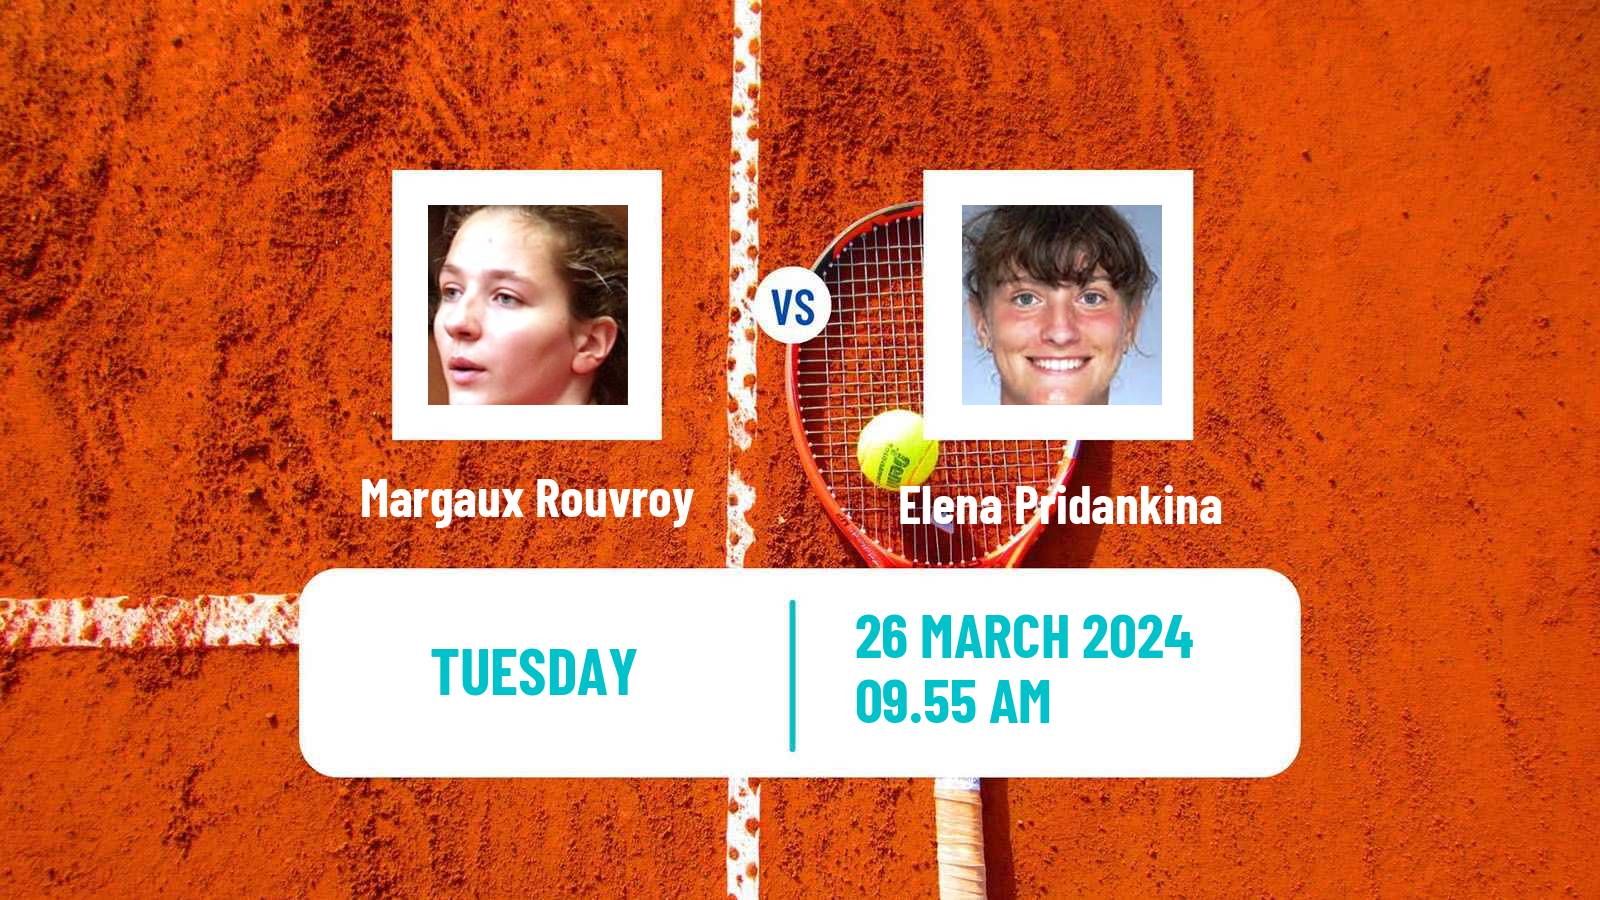 Tennis ITF W75 Croissy Beaubourg Women Margaux Rouvroy - Elena Pridankina